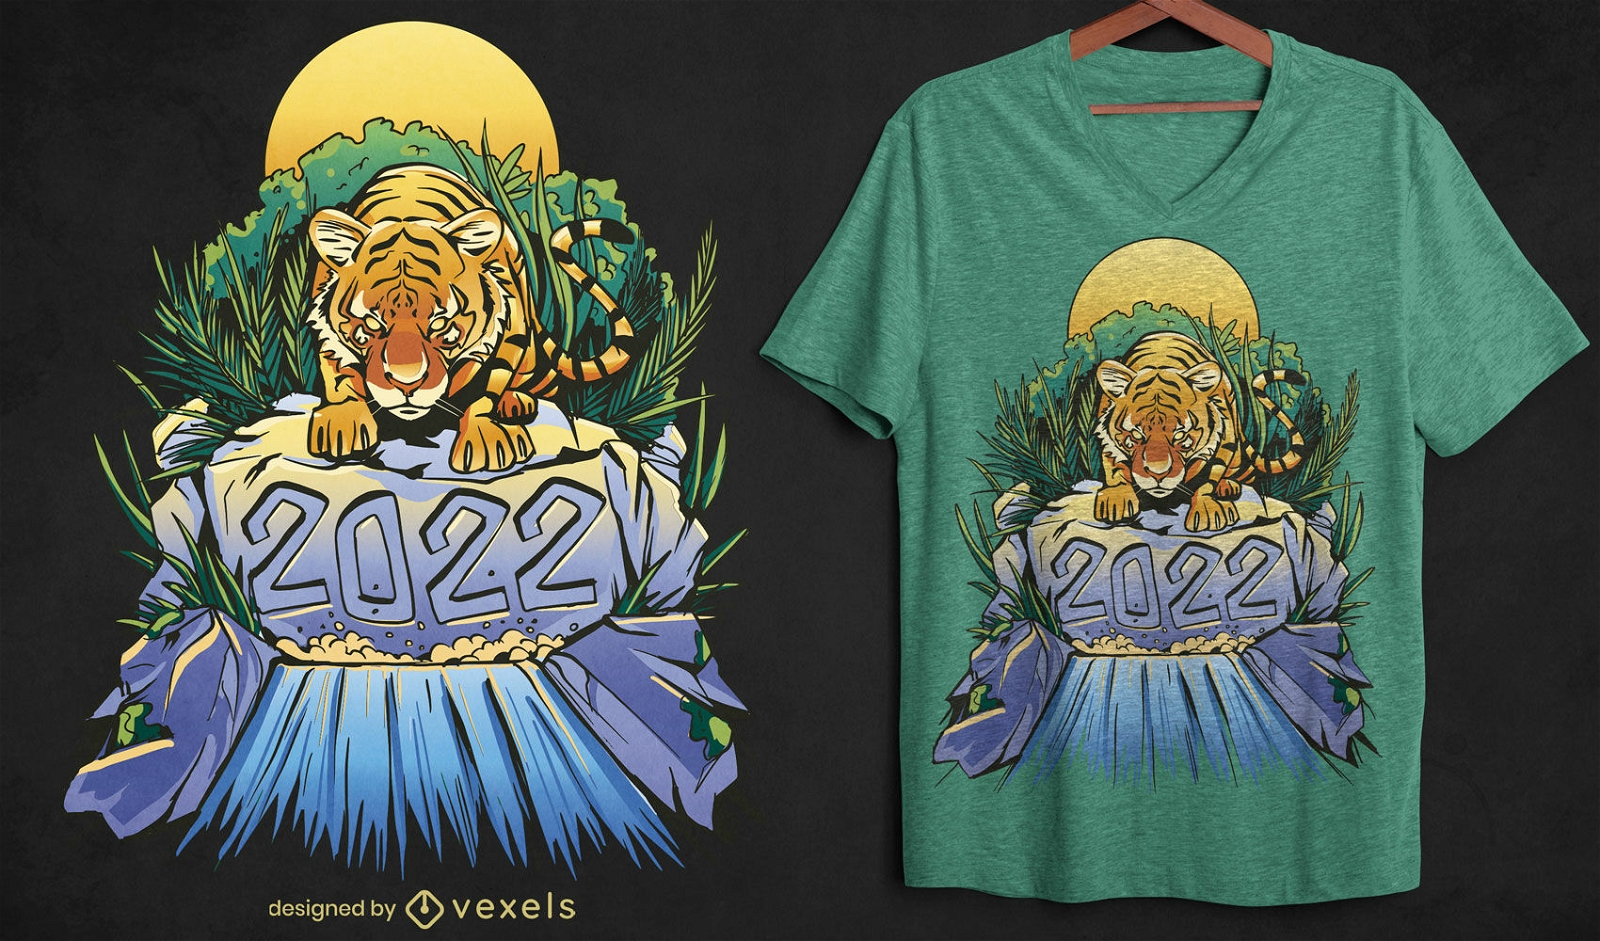 2022 Waterfall tiger t-shirt design